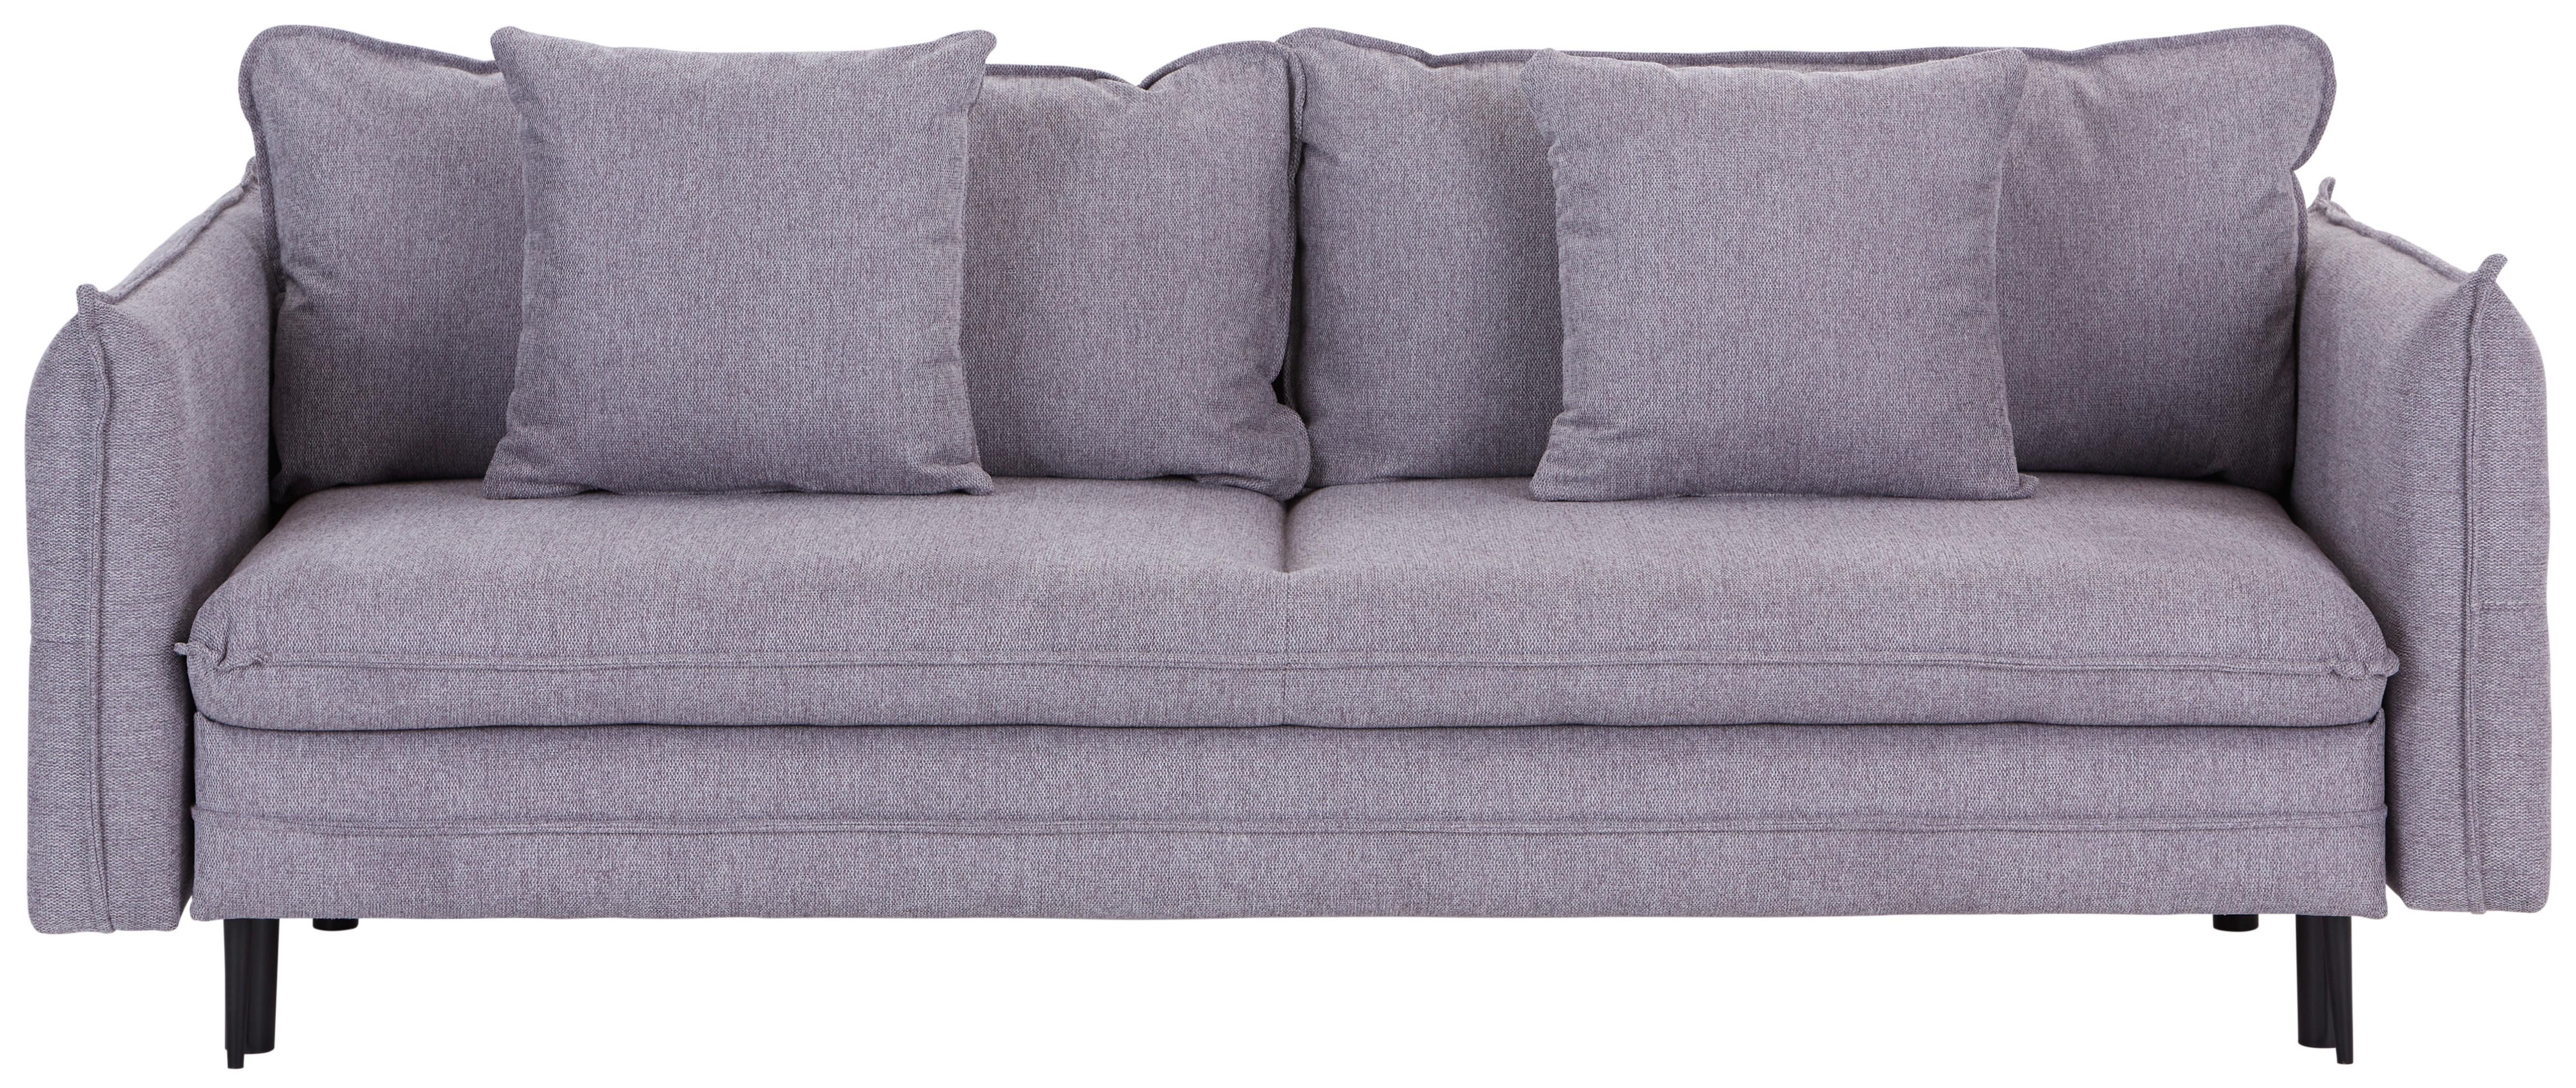 Big Sofa mit Bettfunktion + Stauraum B: 226 cm Hellgrau - Hellgrau/Schwarz, MODERN, Textil (226/91/102cm) - Luca Bessoni